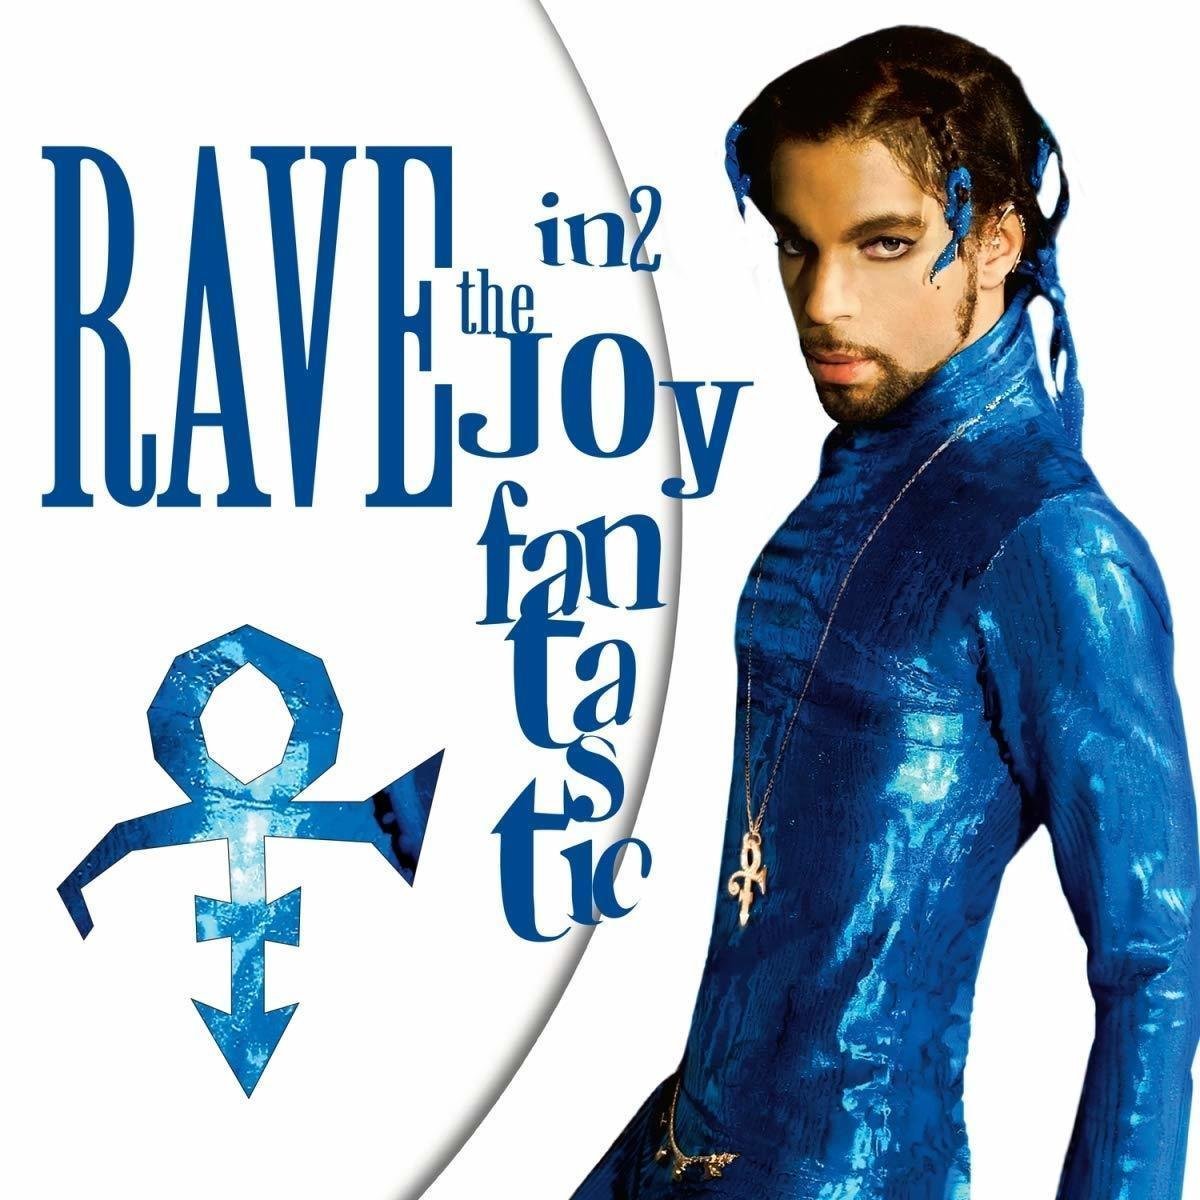 Prince Rave In2 the Joy Fantastic Prince